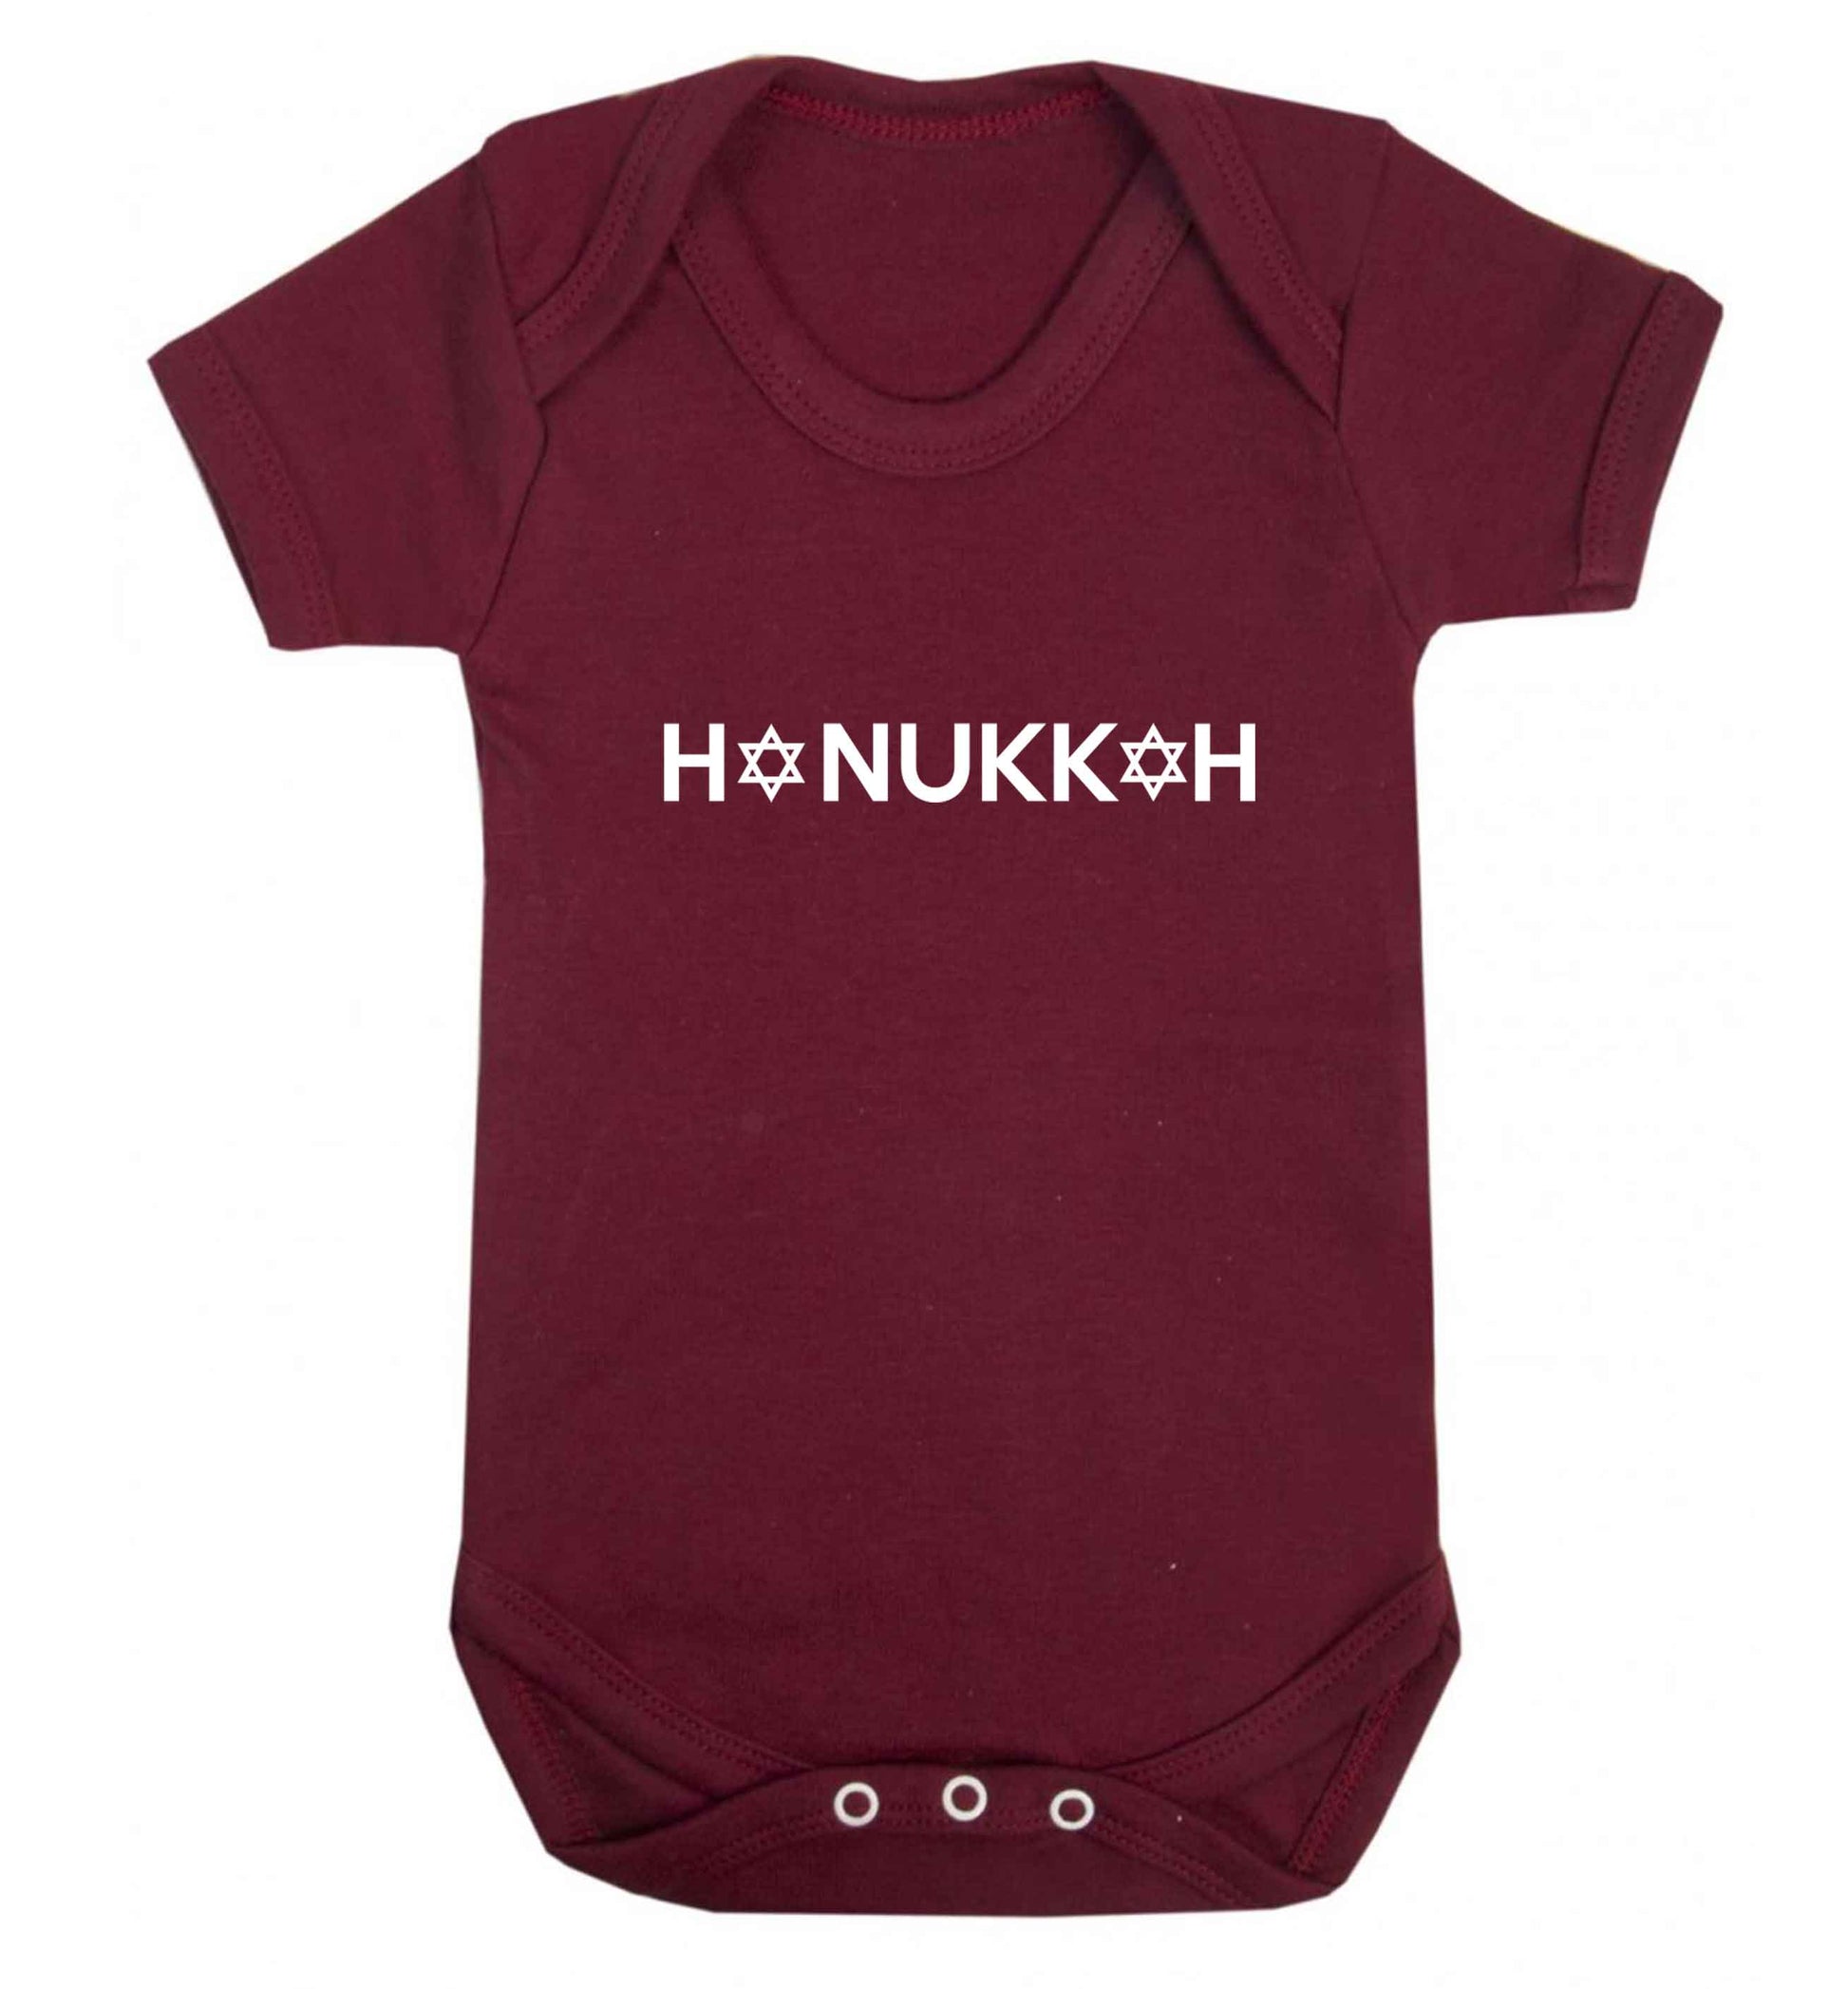 Hanukkah star of david baby vest maroon 18-24 months